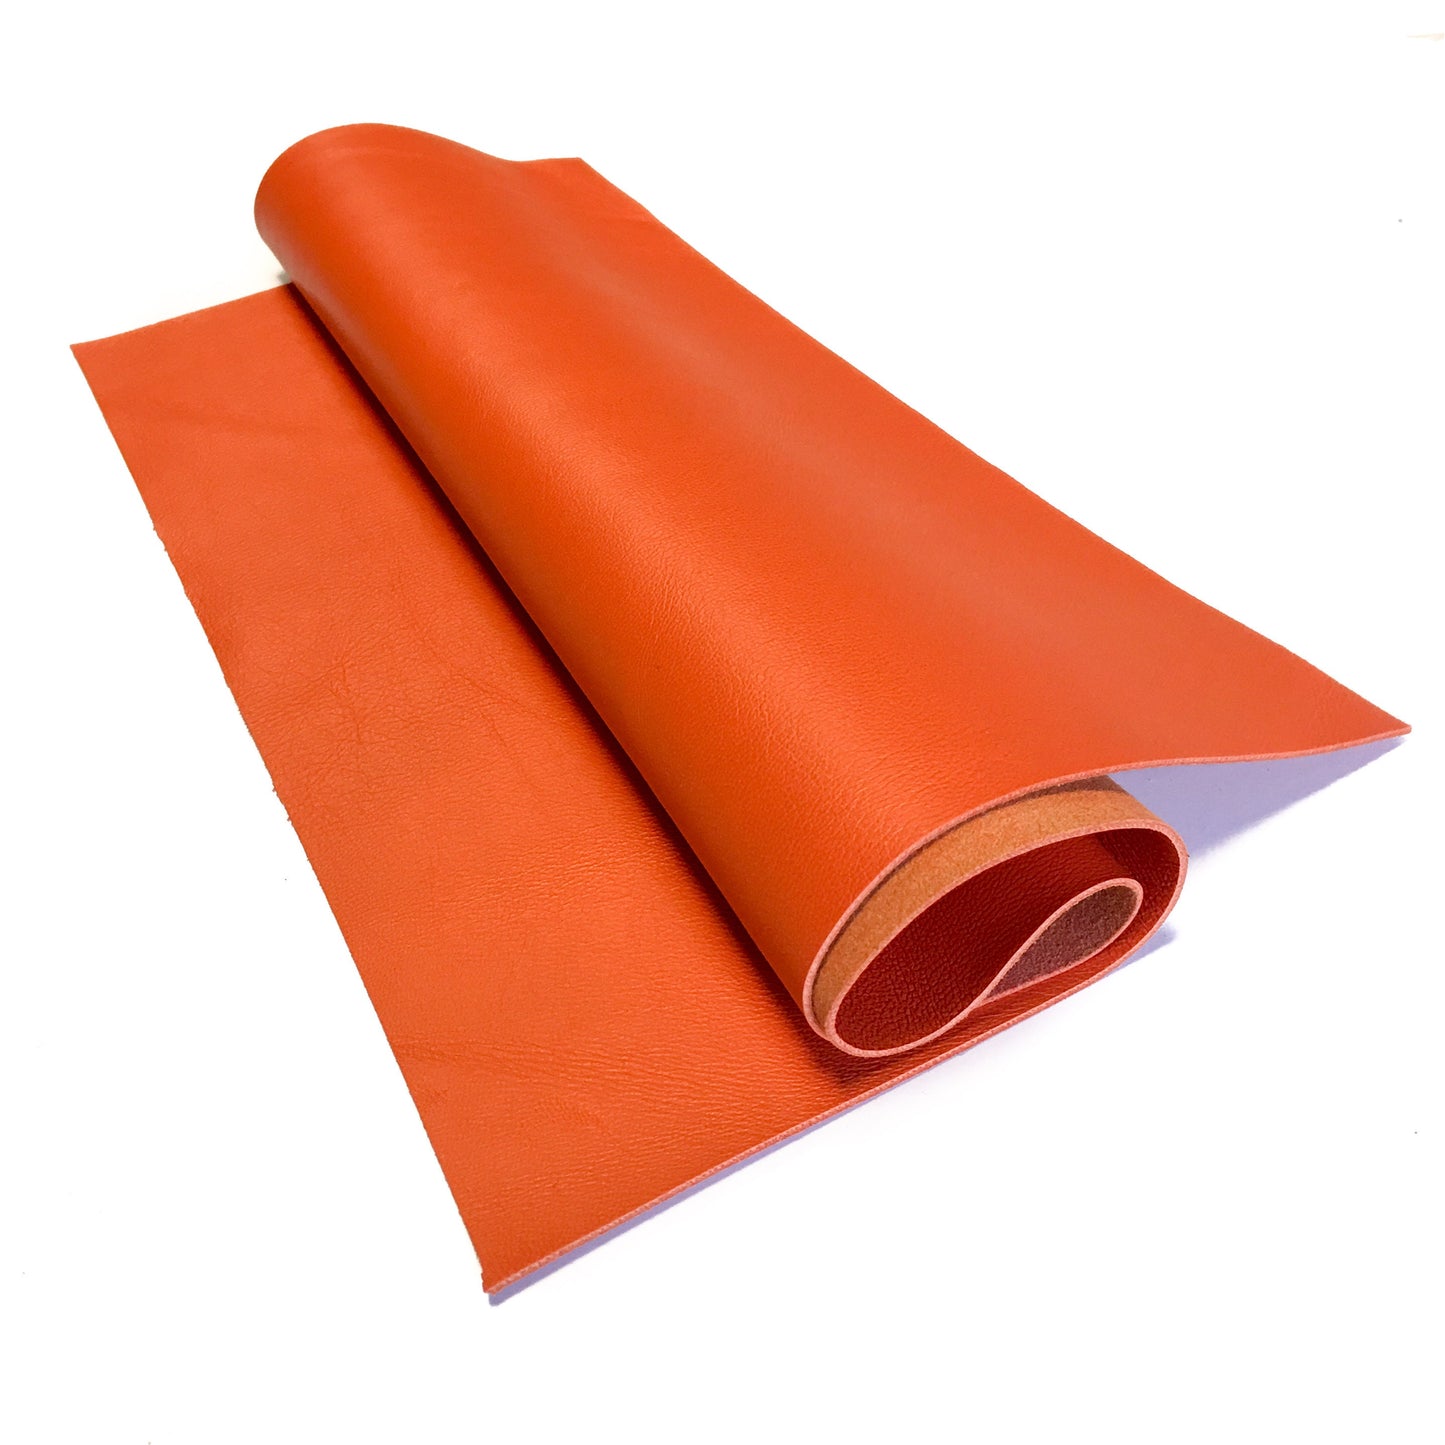 Bright Orange Lambskin Sheets 1mm/2.5oz ORANGEADE 503